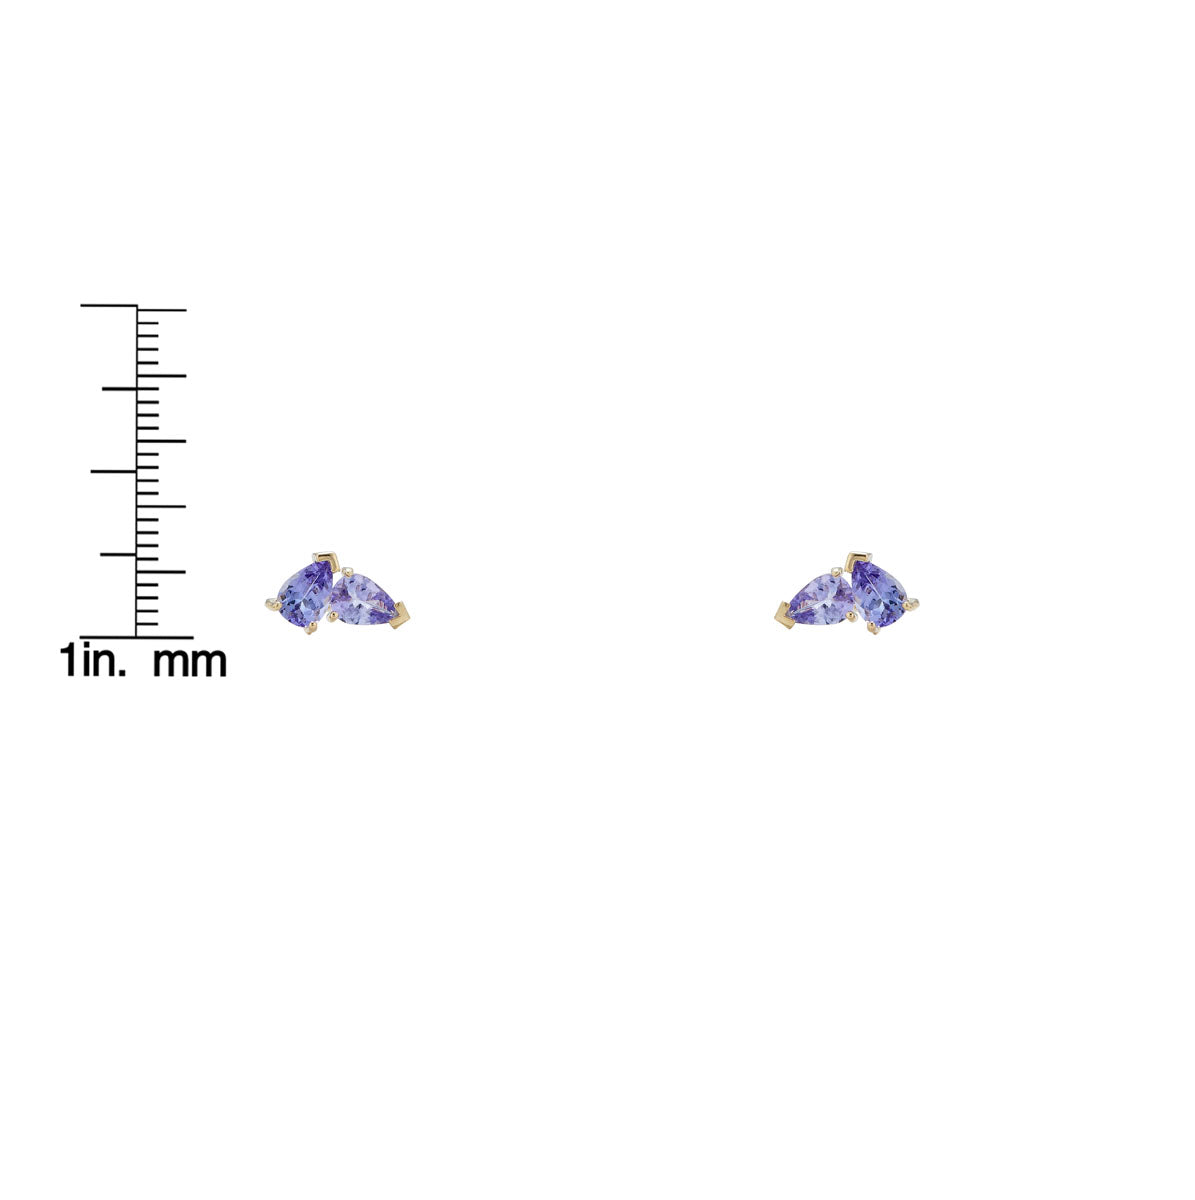 double pear iolite stud earrings scale measurement